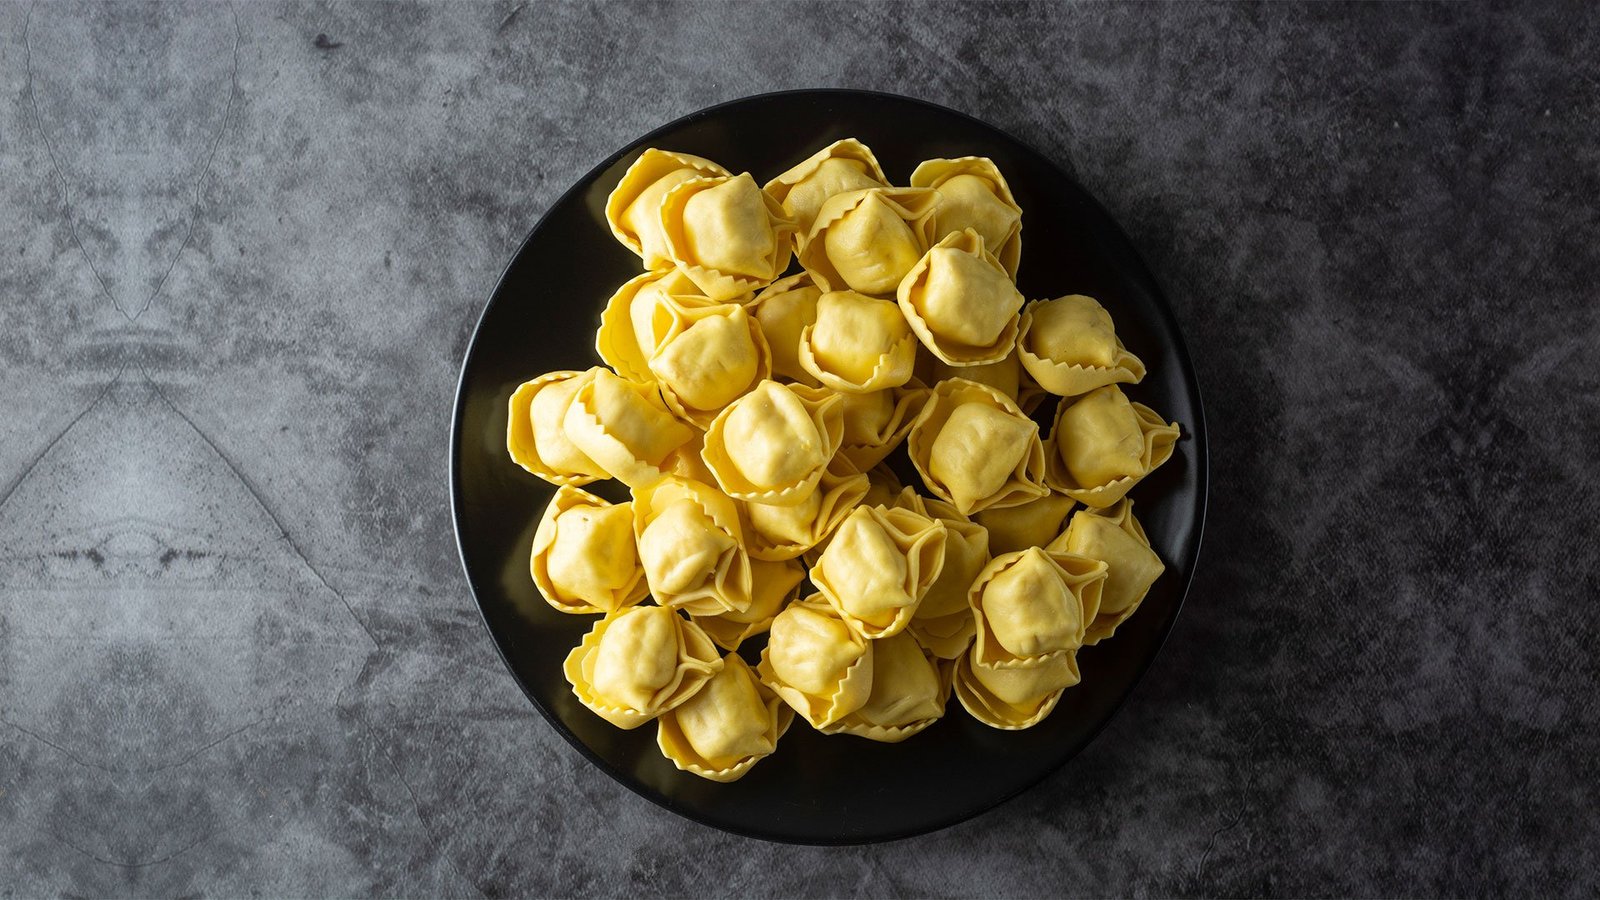 How to make homemade pasta | Shereen Mitwalli's Recipes